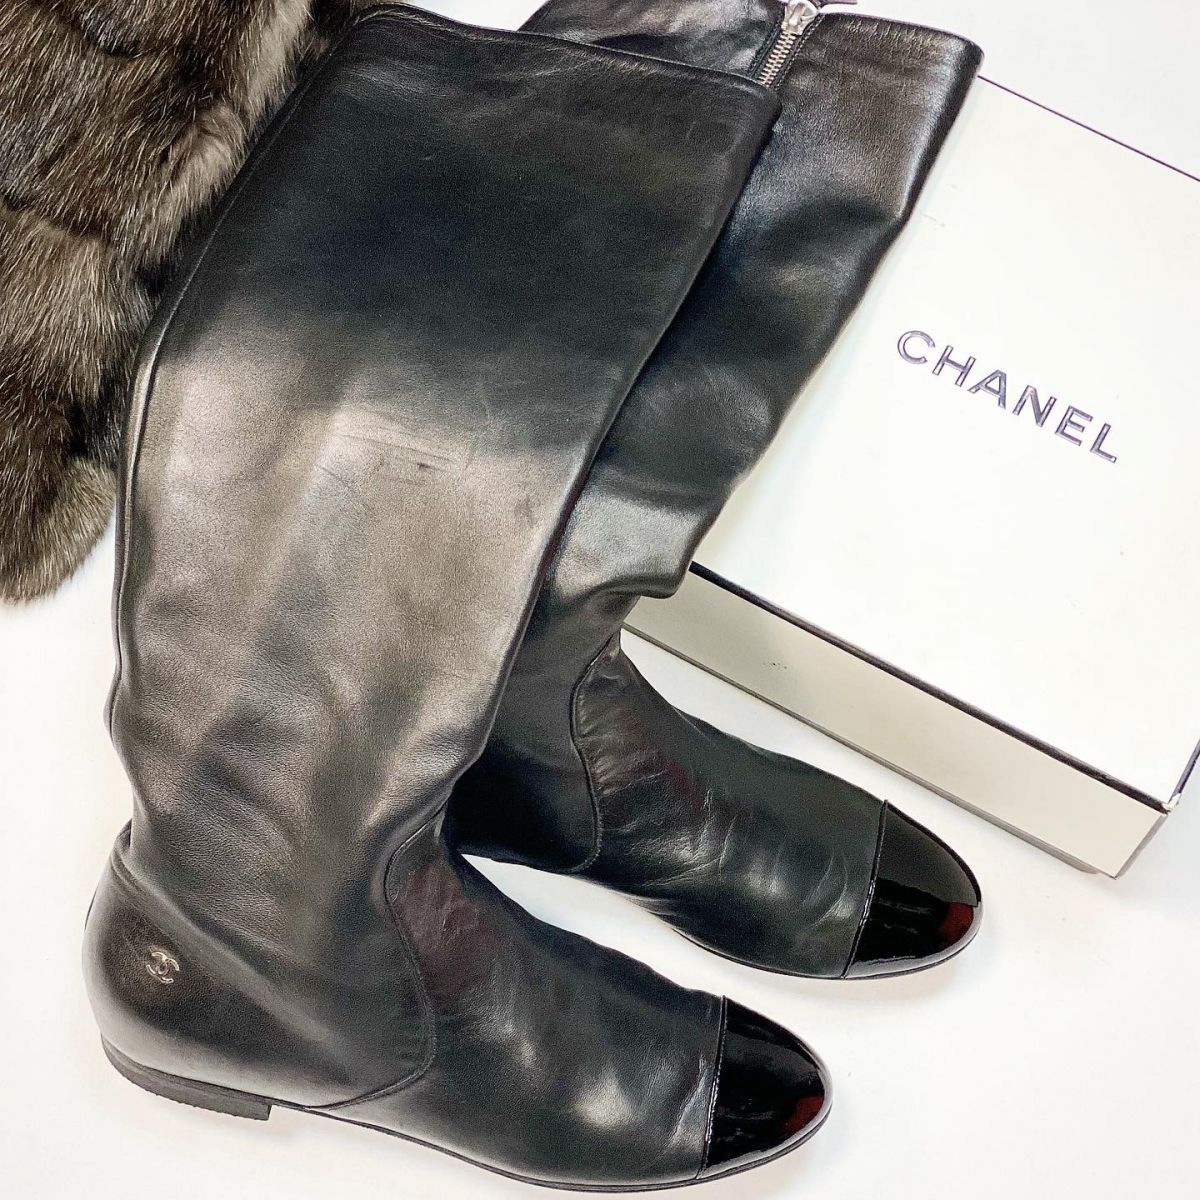 Сапоги Chanel размер 37 цена 30 770 руб 